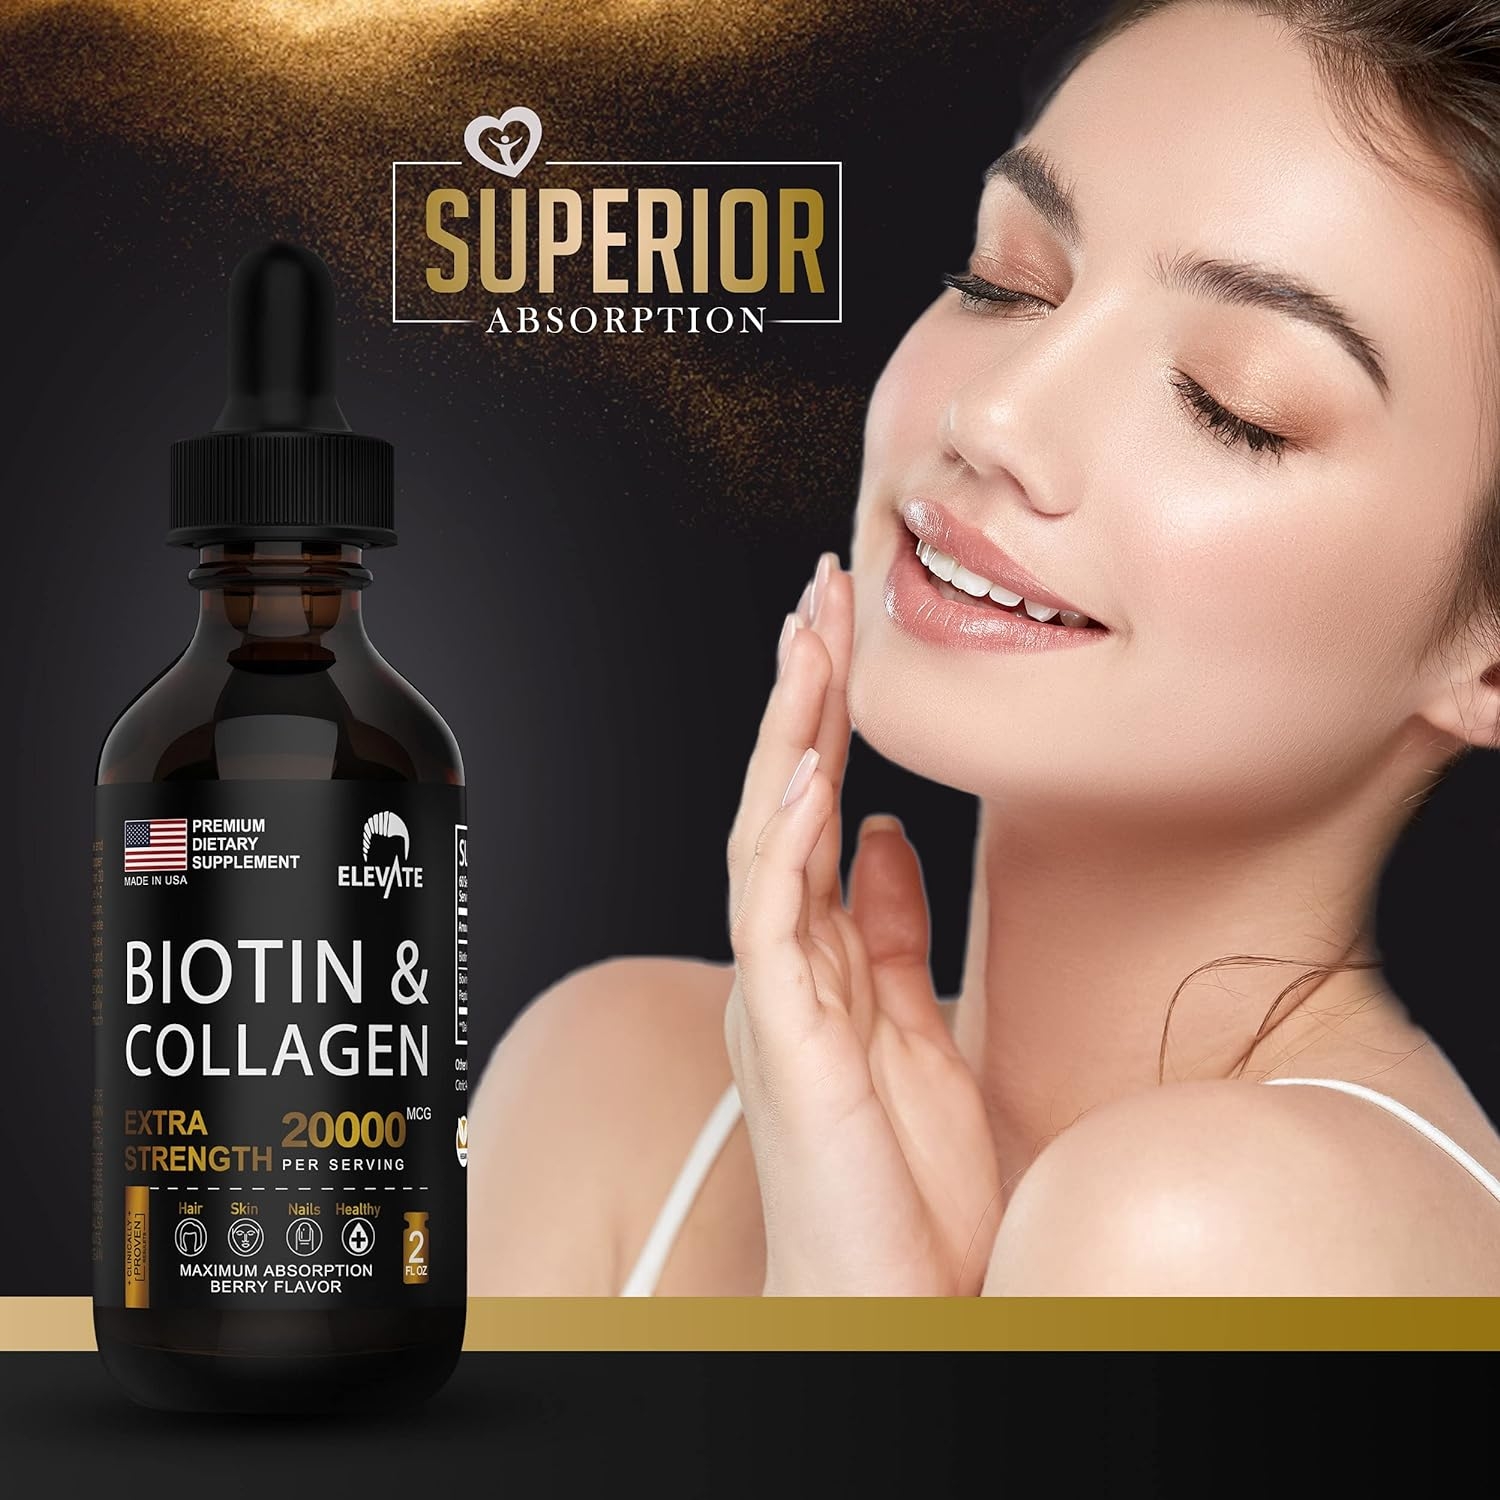 ELEVATE Biotin & Collagen Hair Growth Drops 20000mcg - Liquid Biotin 10000mcg & Collagen 10000mcg Natural Supplement for Best Absorption to Support Healthy Skin & Strong Nails - USA Made - Men & Women